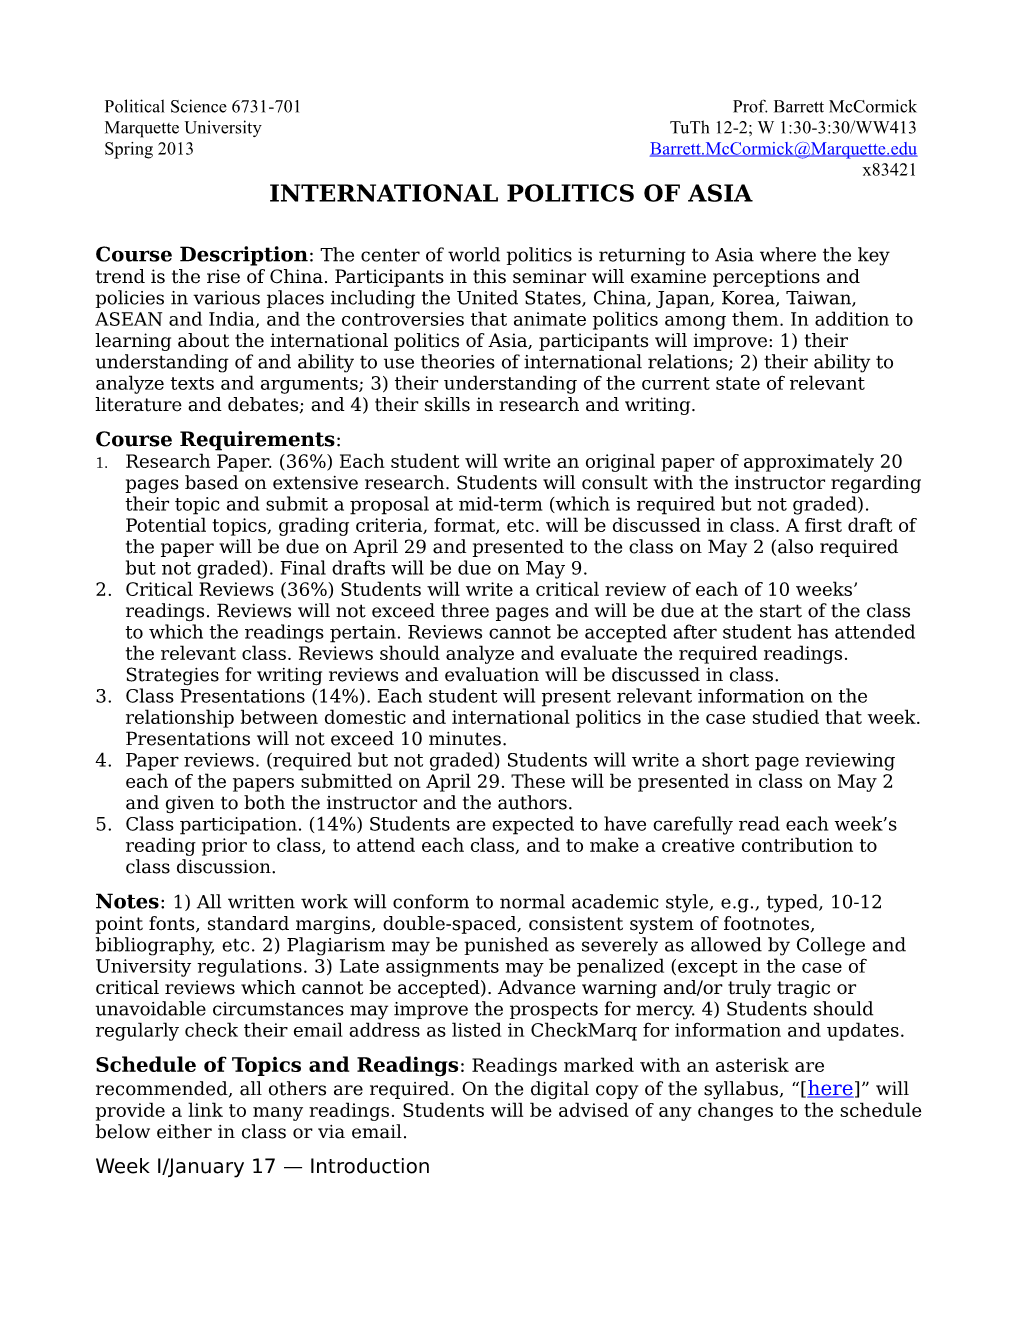 International Politics of Asia